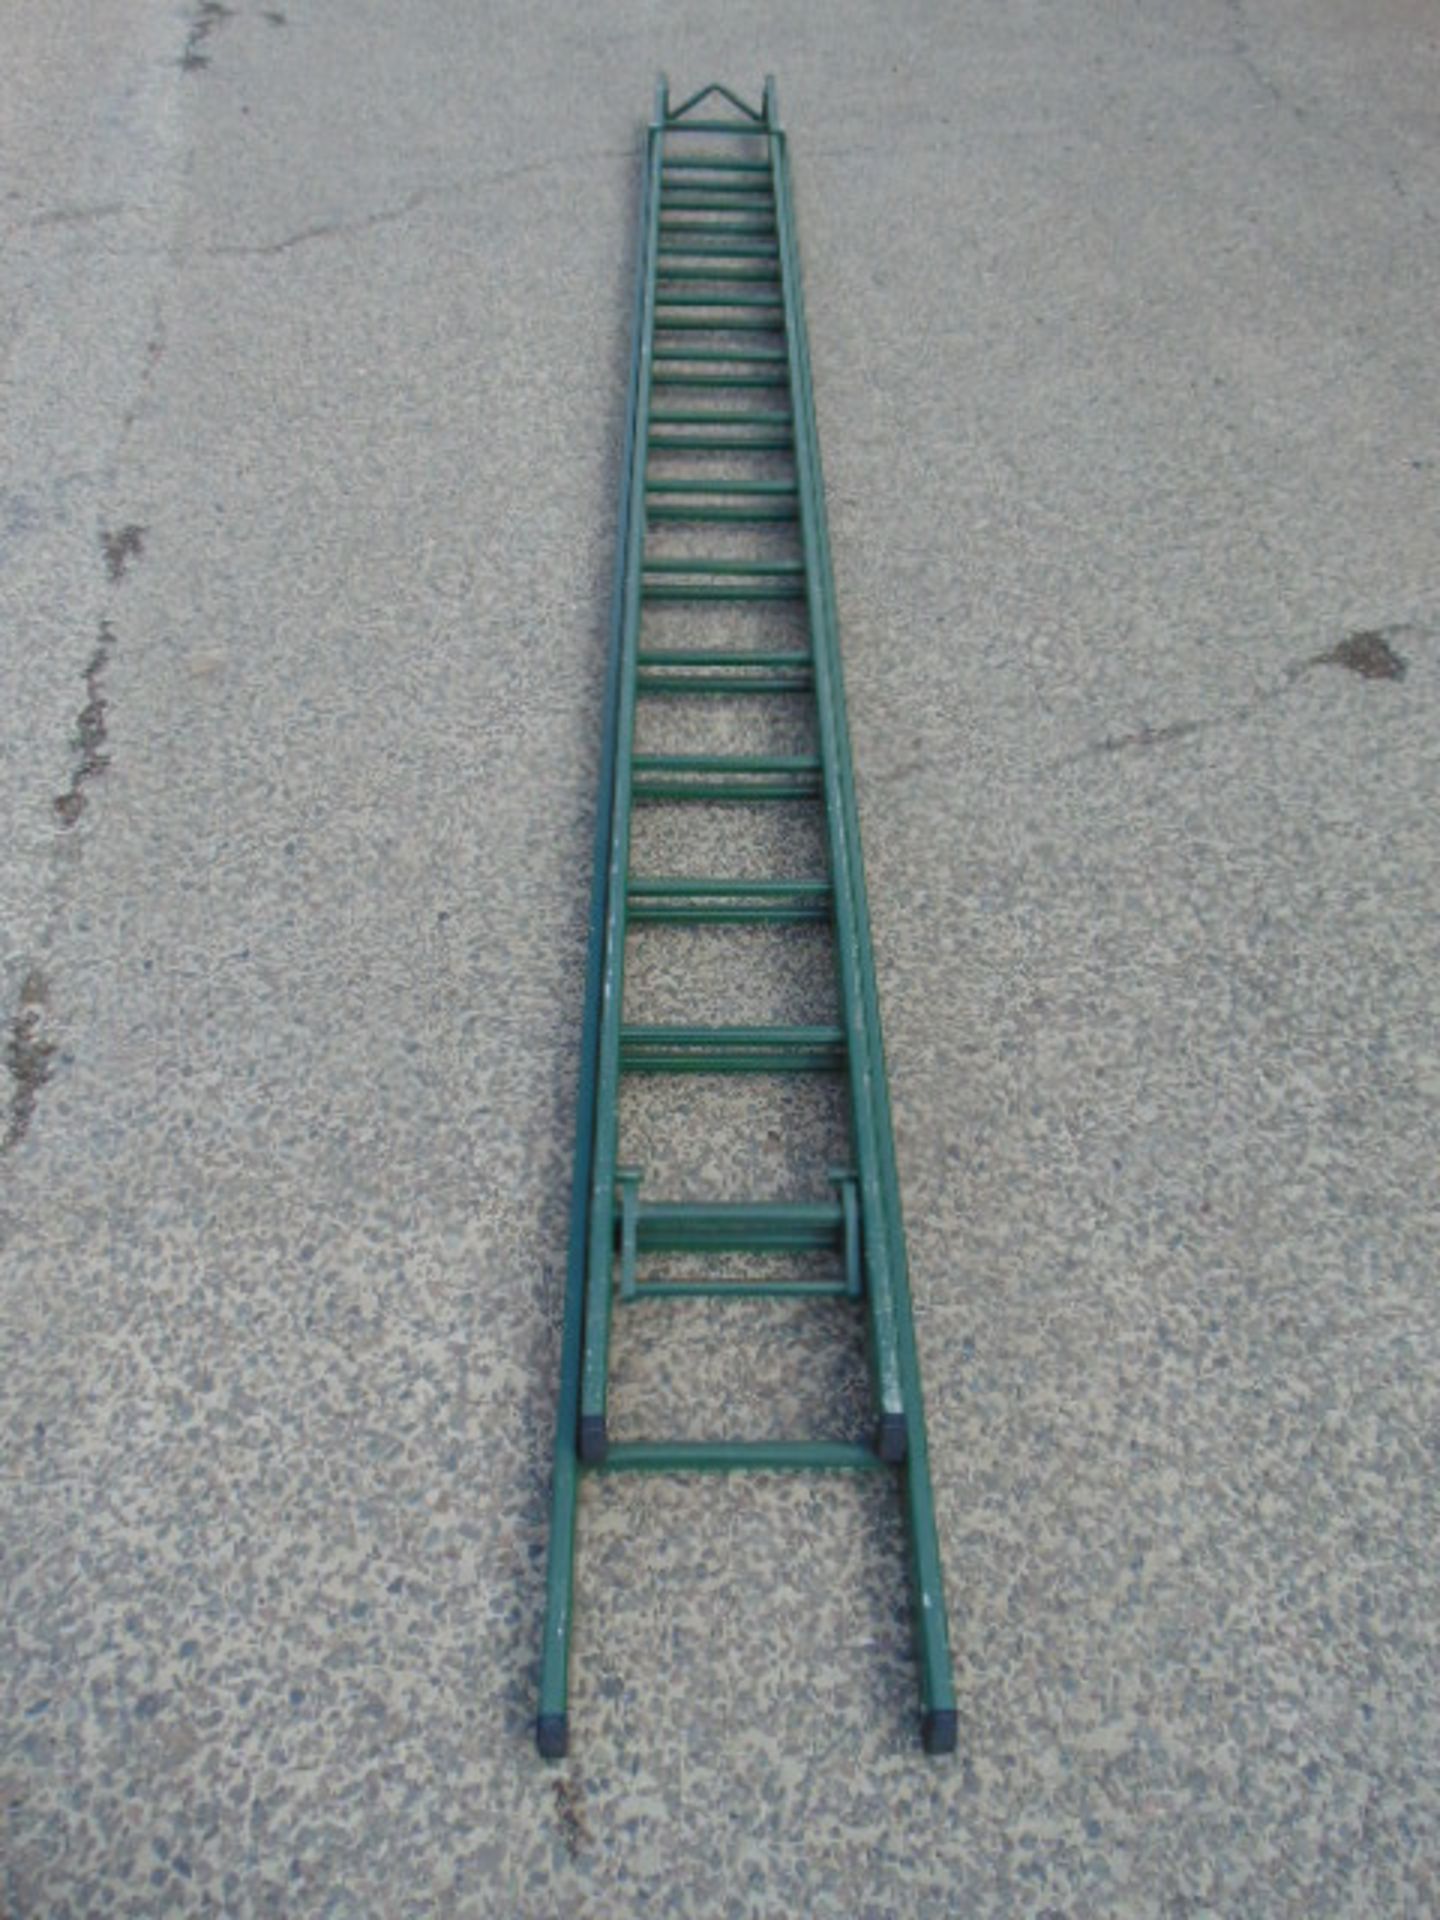 Ramsay 3.7m 2 Section Aluminium Ladder - Image 2 of 6